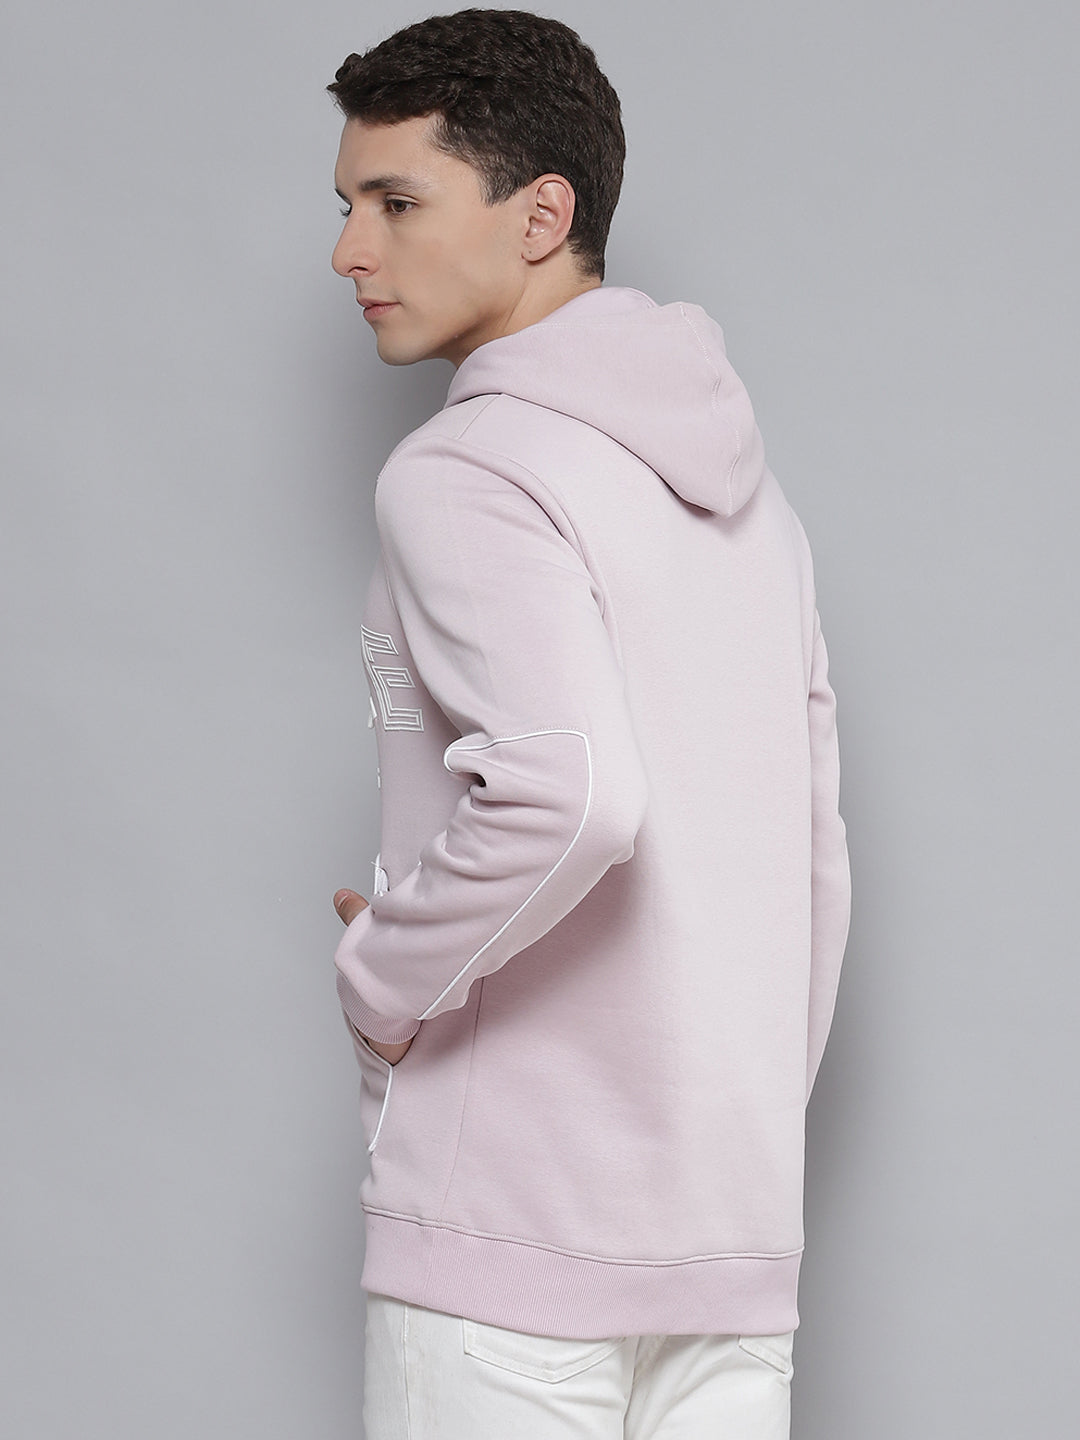 Alcis Men Lavender & White Printed Hooded Sweatshirt